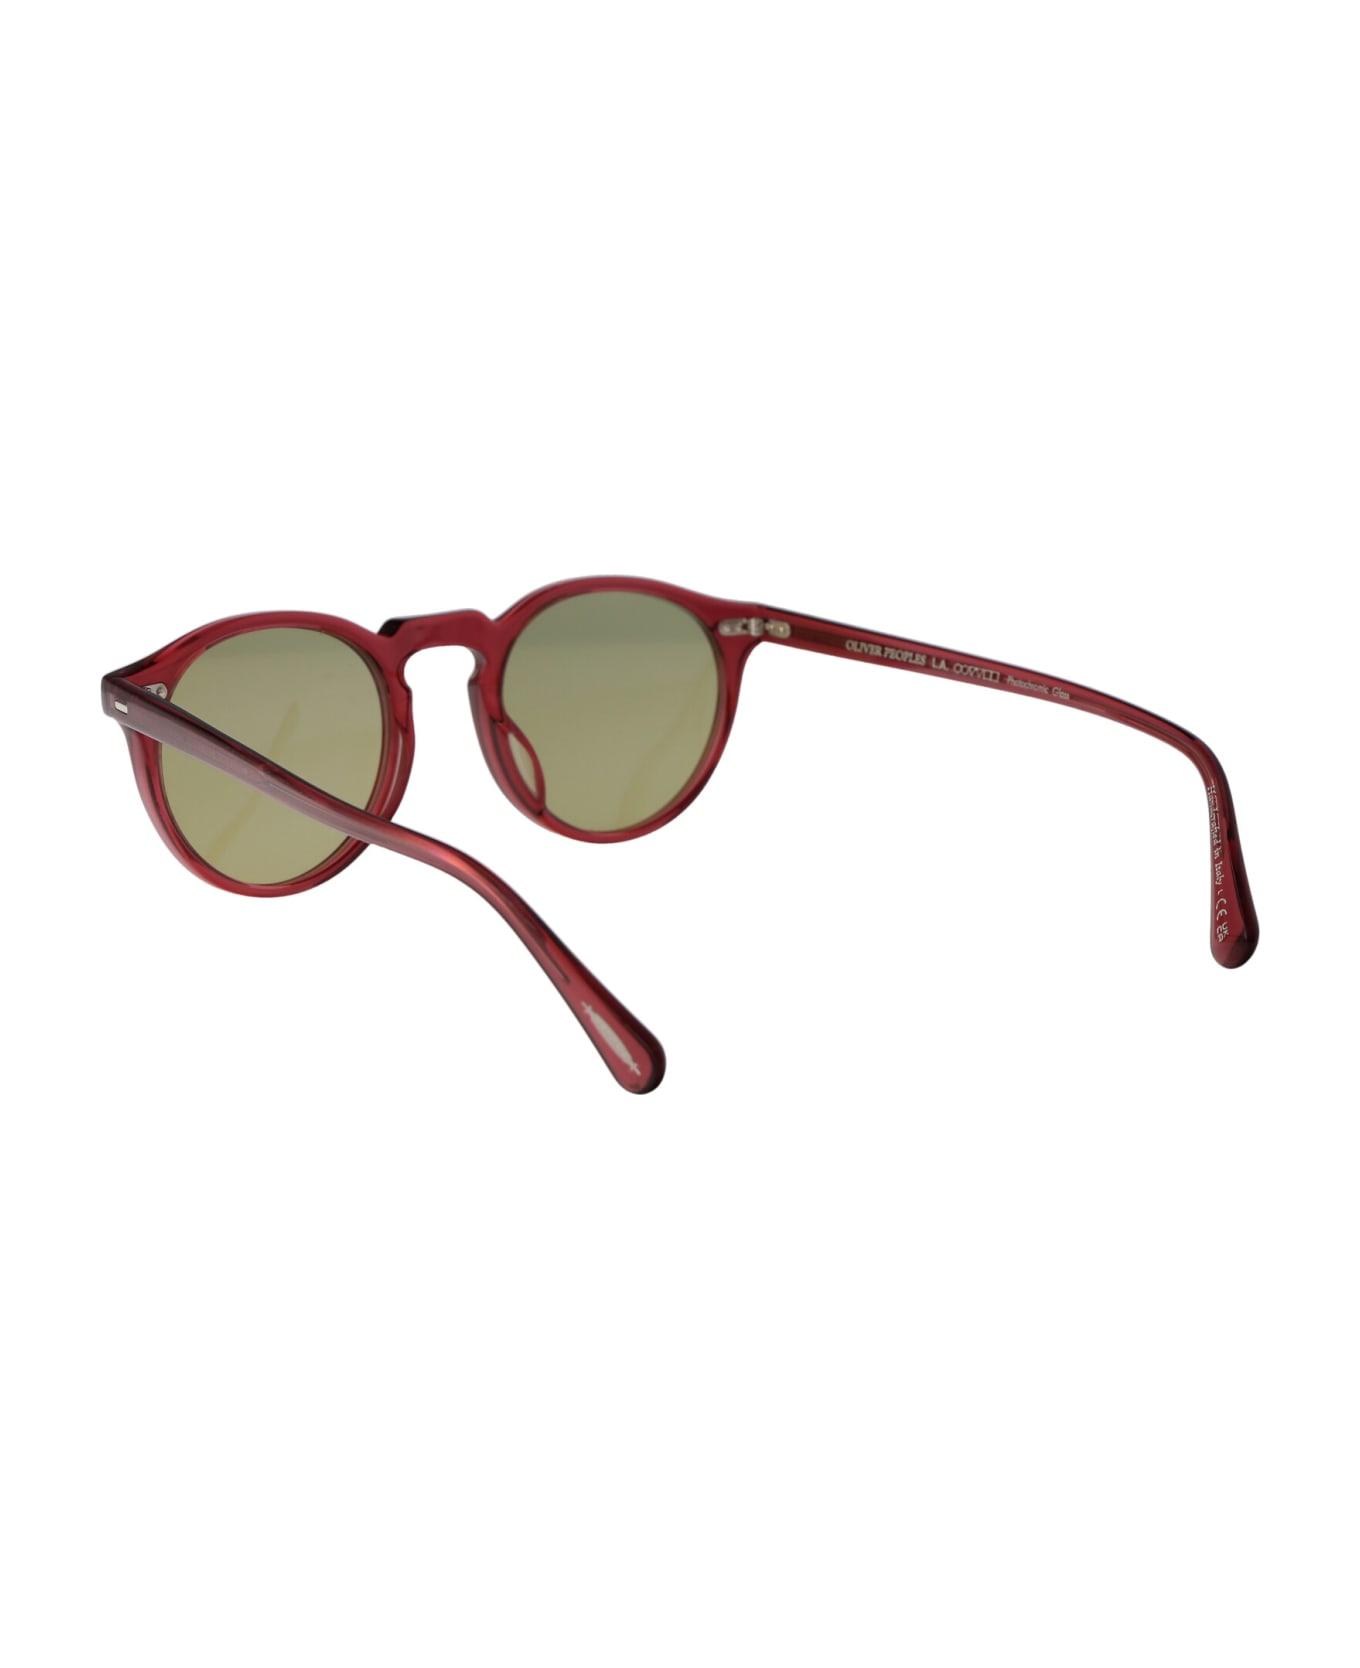 Oliver Peoples Gregory Peck Sun e558 Sunglasses - 17644C Translucent Rust